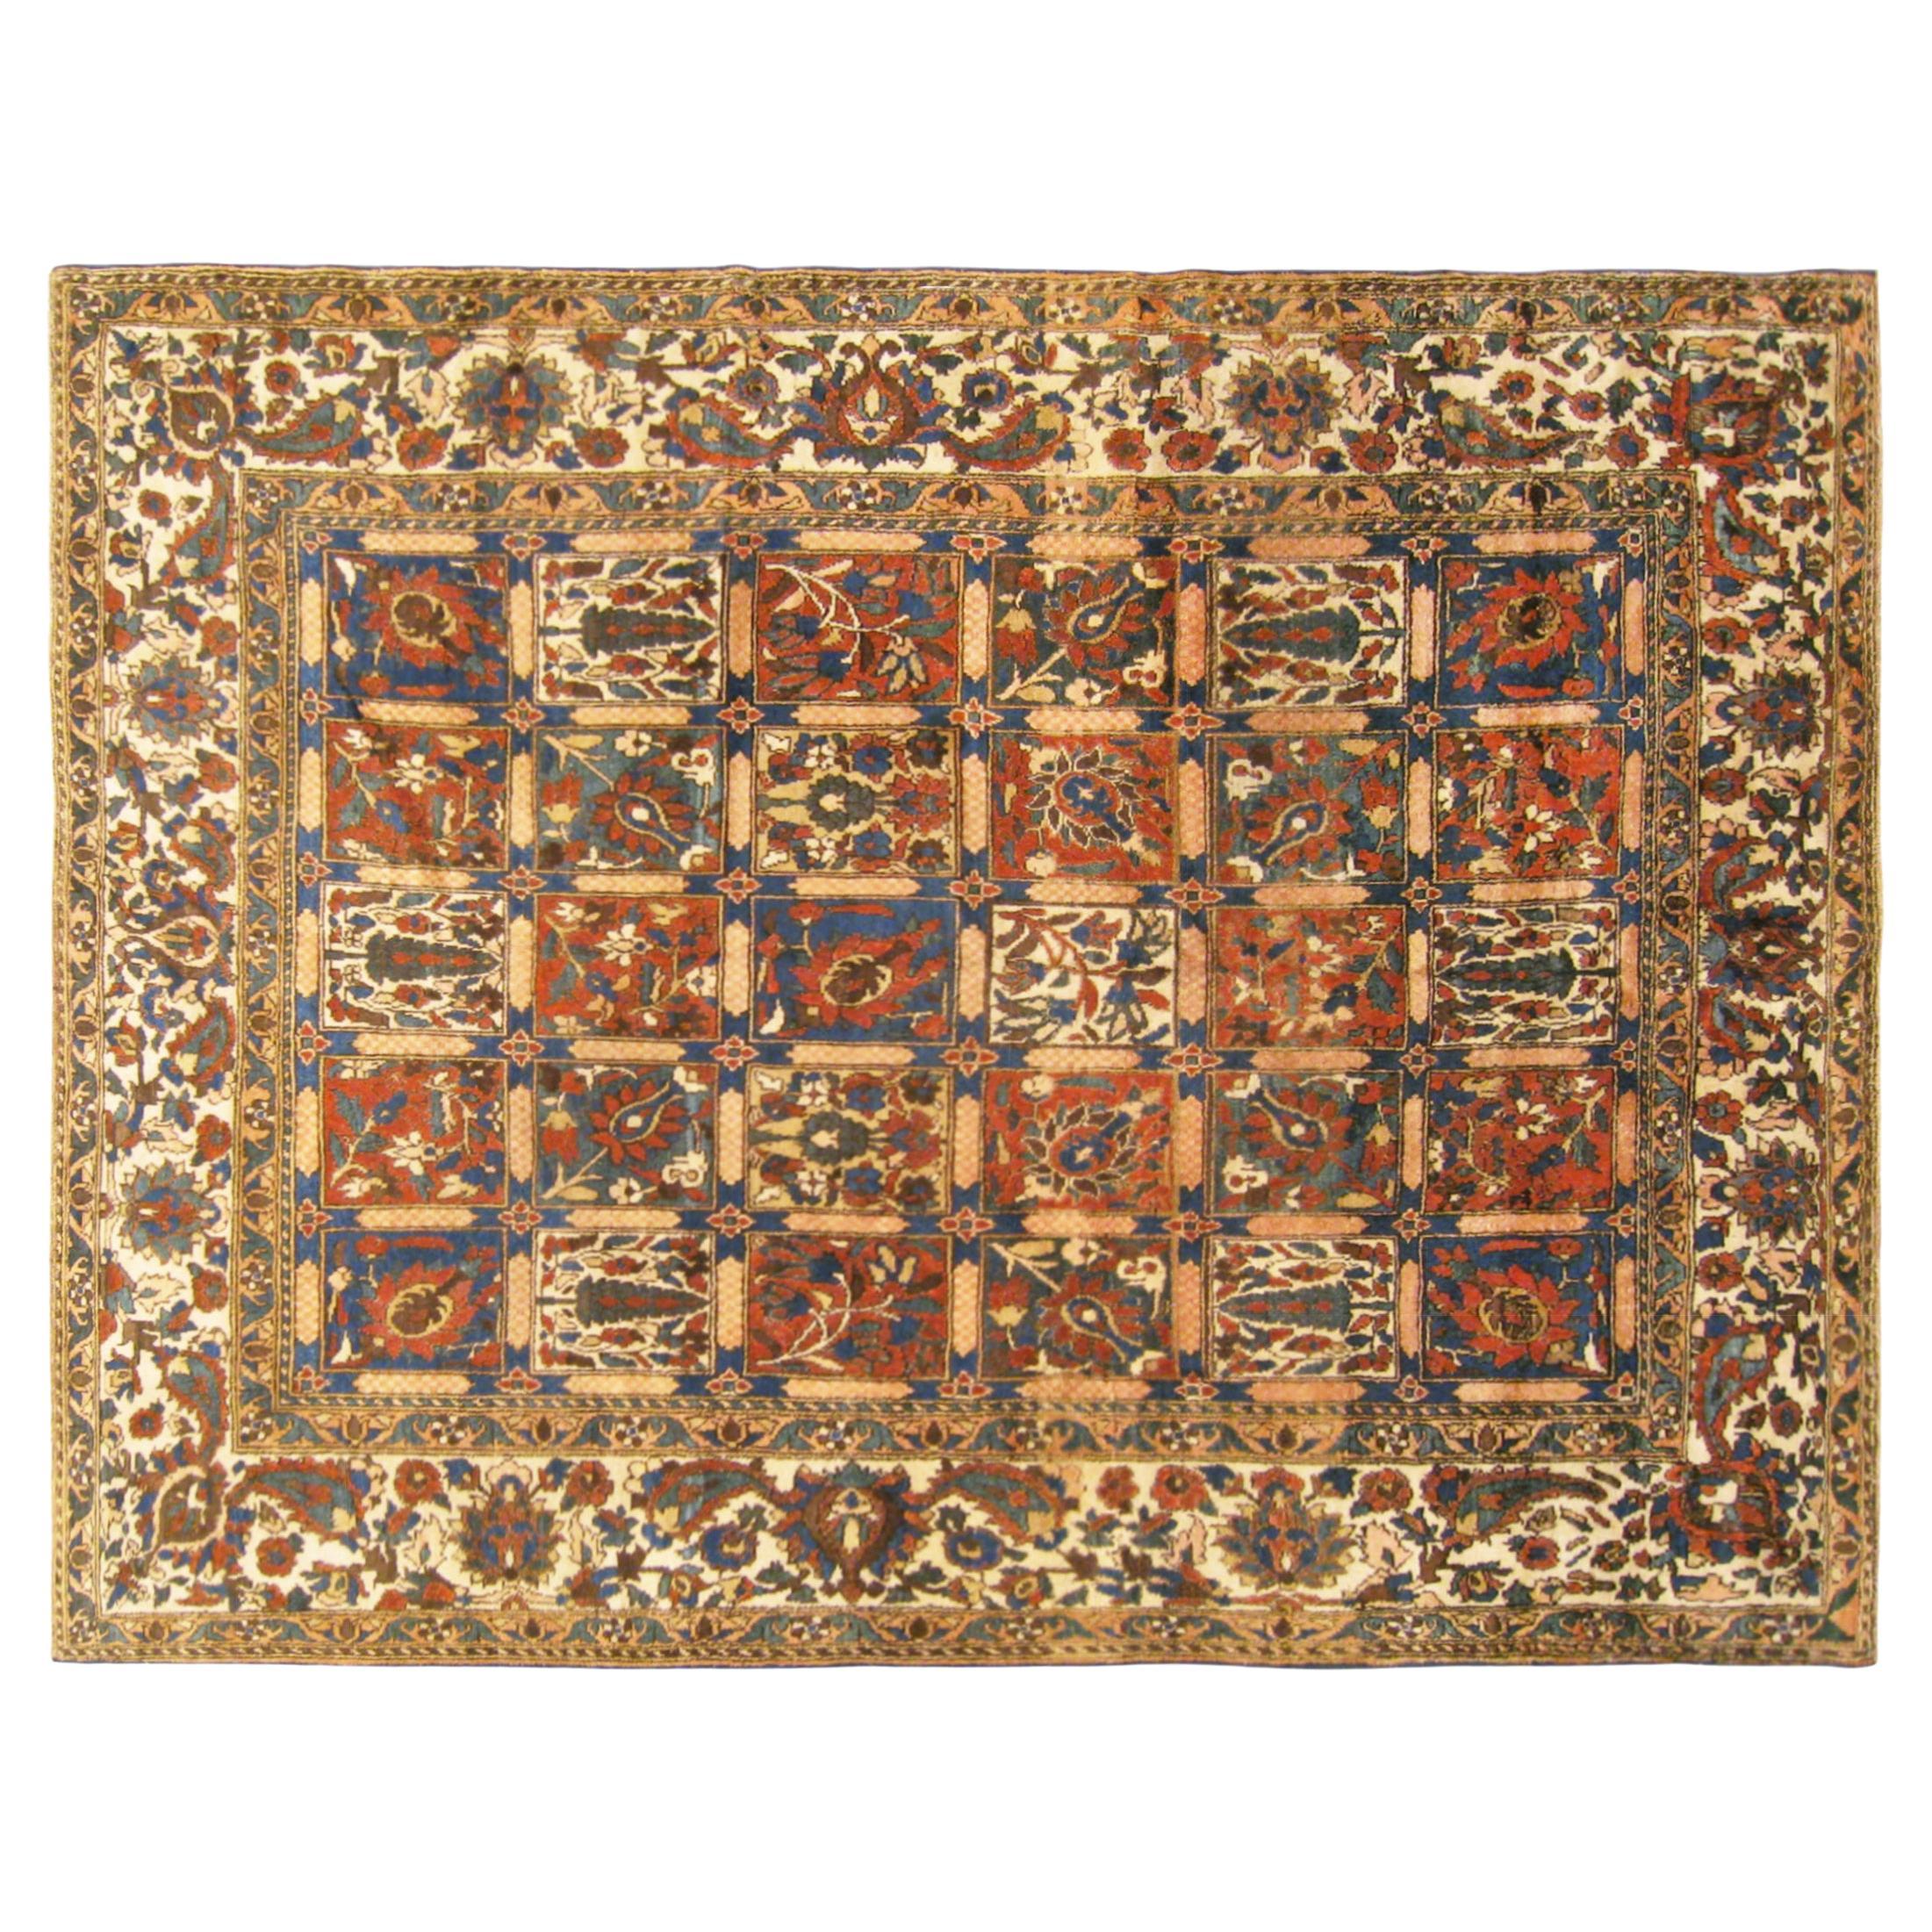 Vintage Persian Decorative Oriental Baktiari Rug in Room Size 